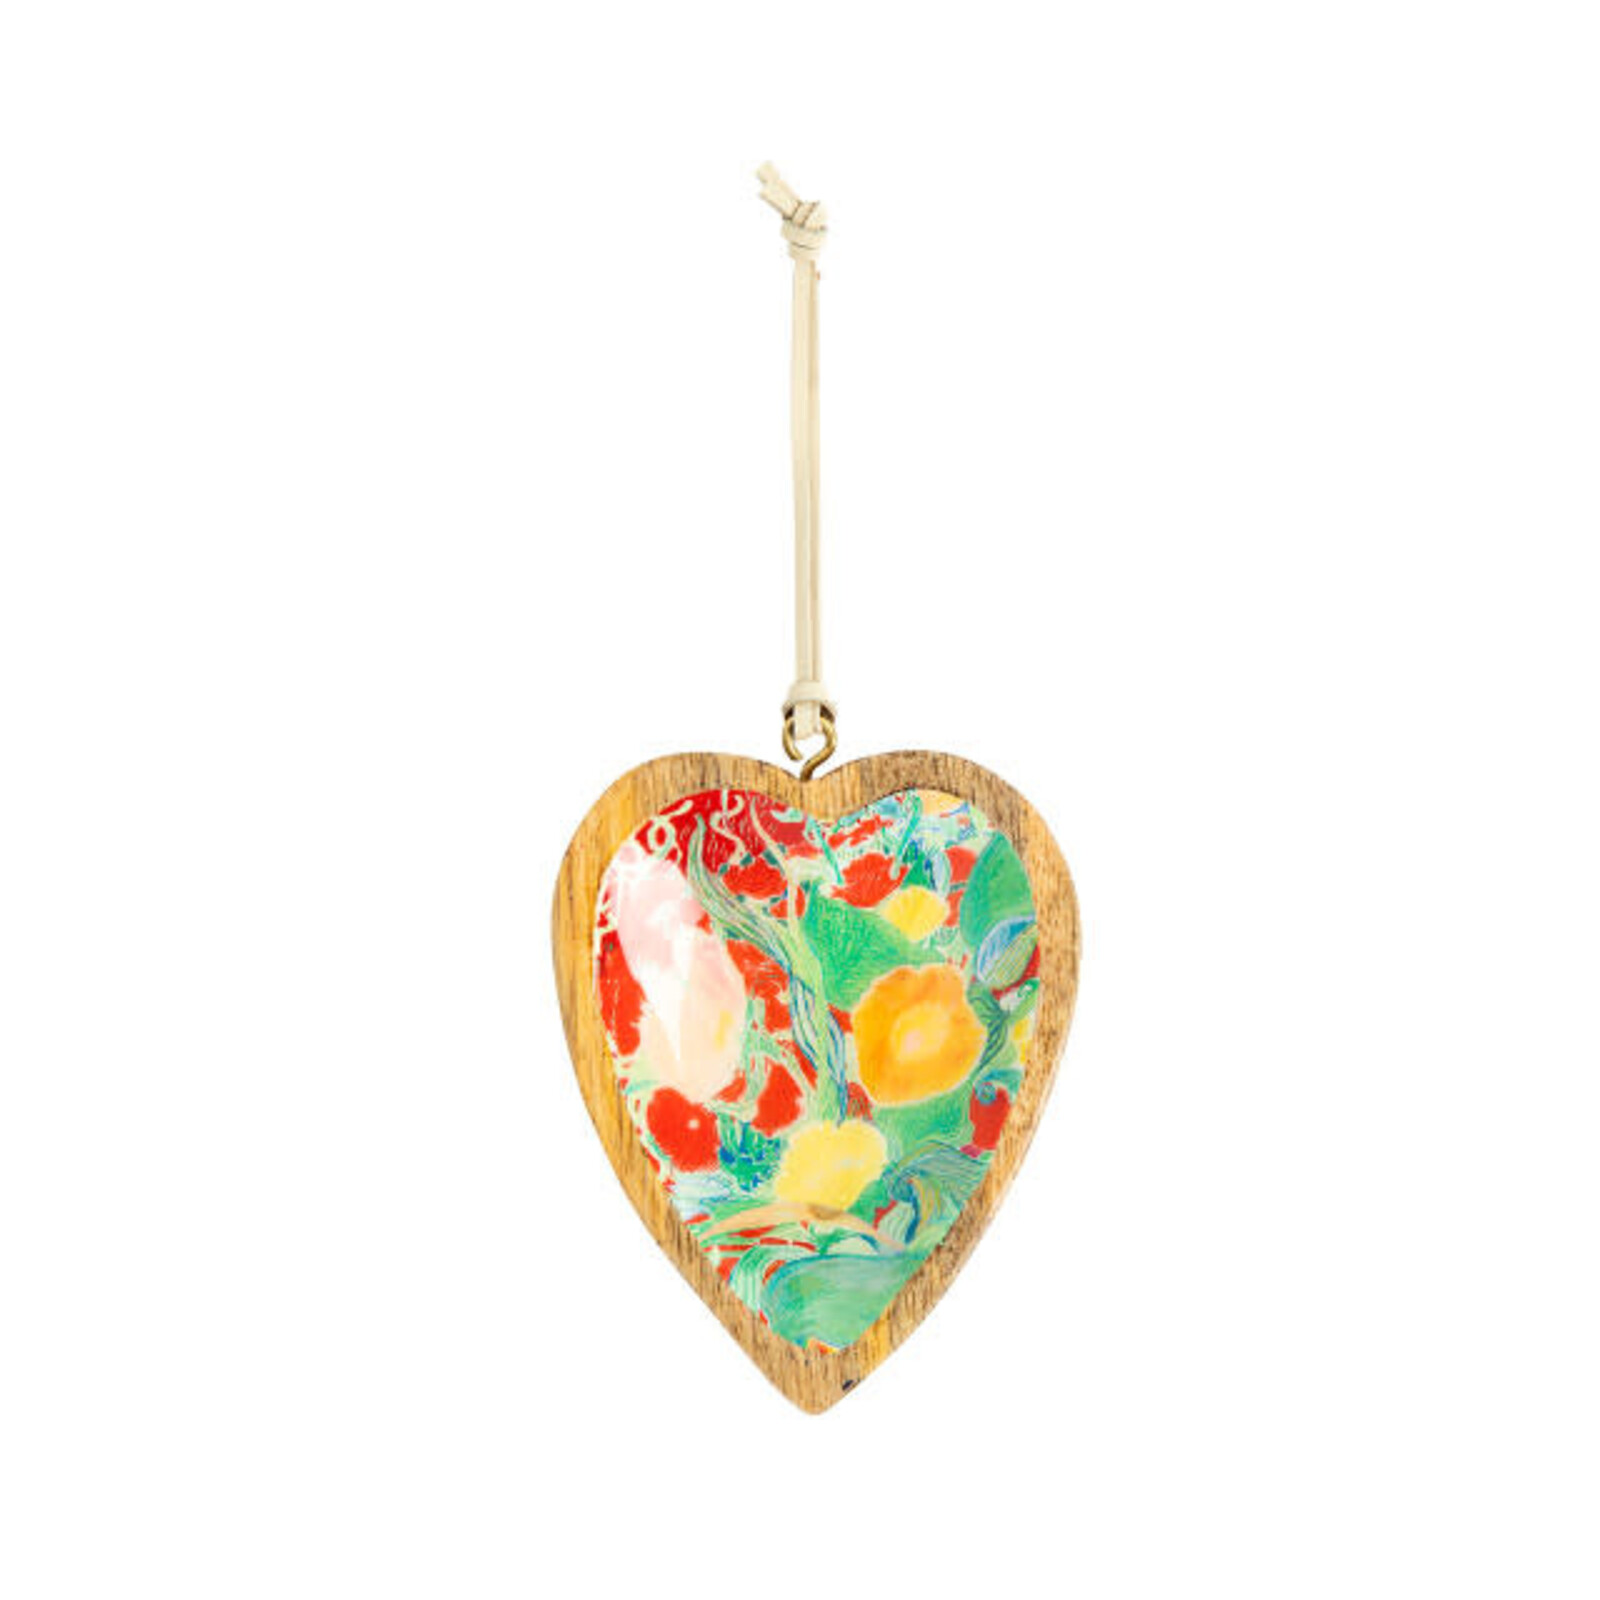 Grace Goad ArtLifting Heart Ornament - Floral Stripes     2020220610 loading=